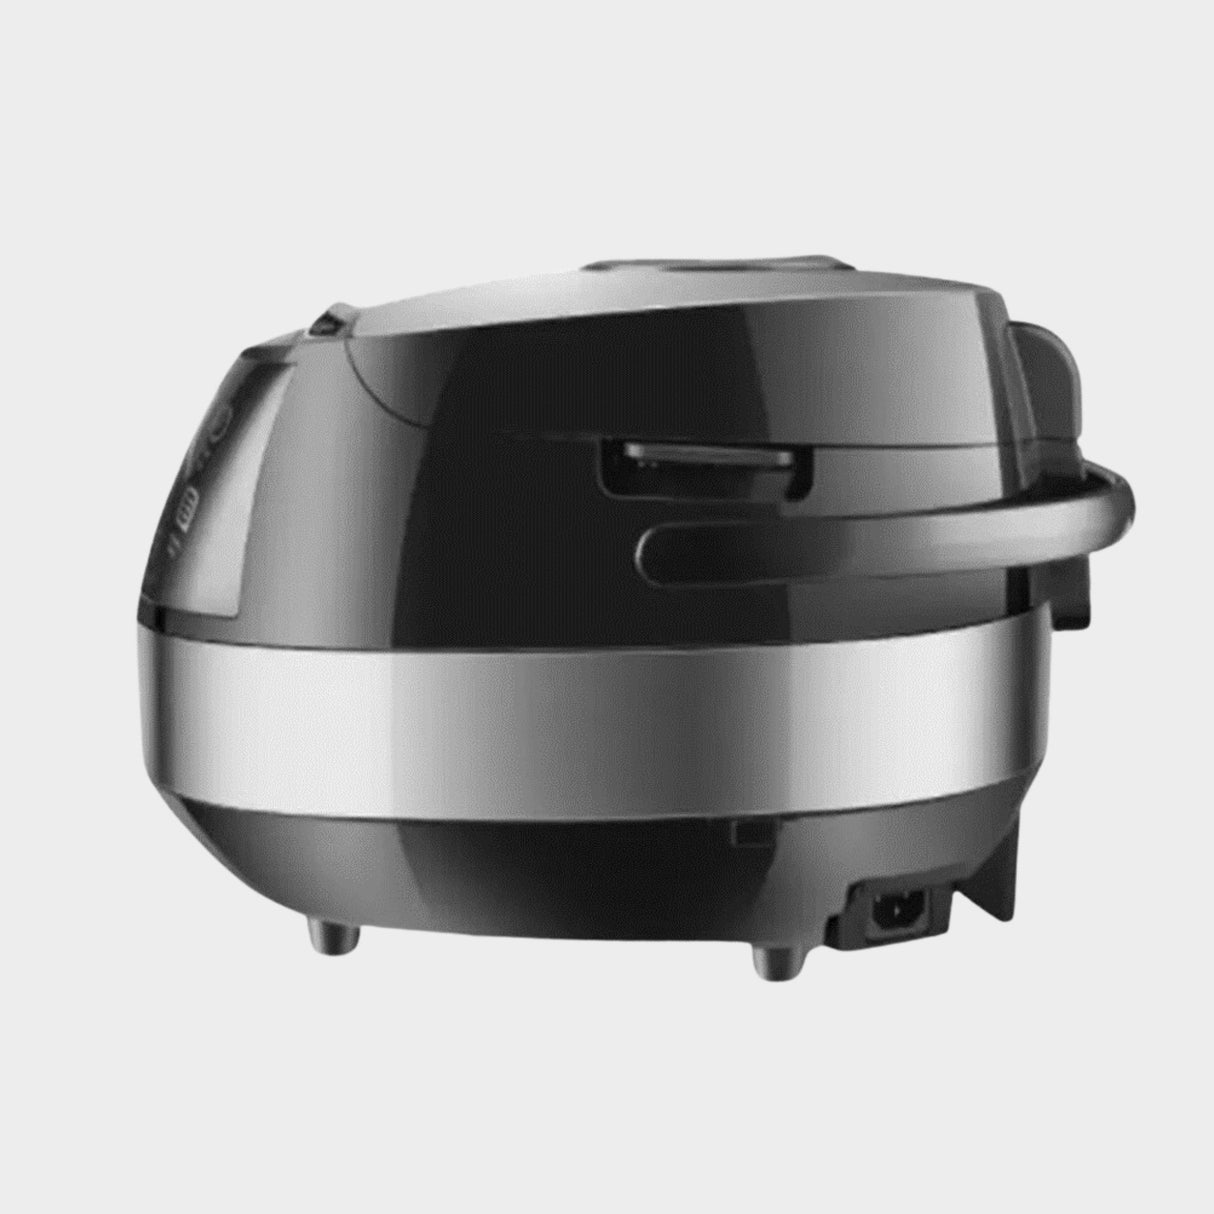 DSP 5L Digital Smart Steam Multi-function Rice Cooker - Black - KWT Tech Mart